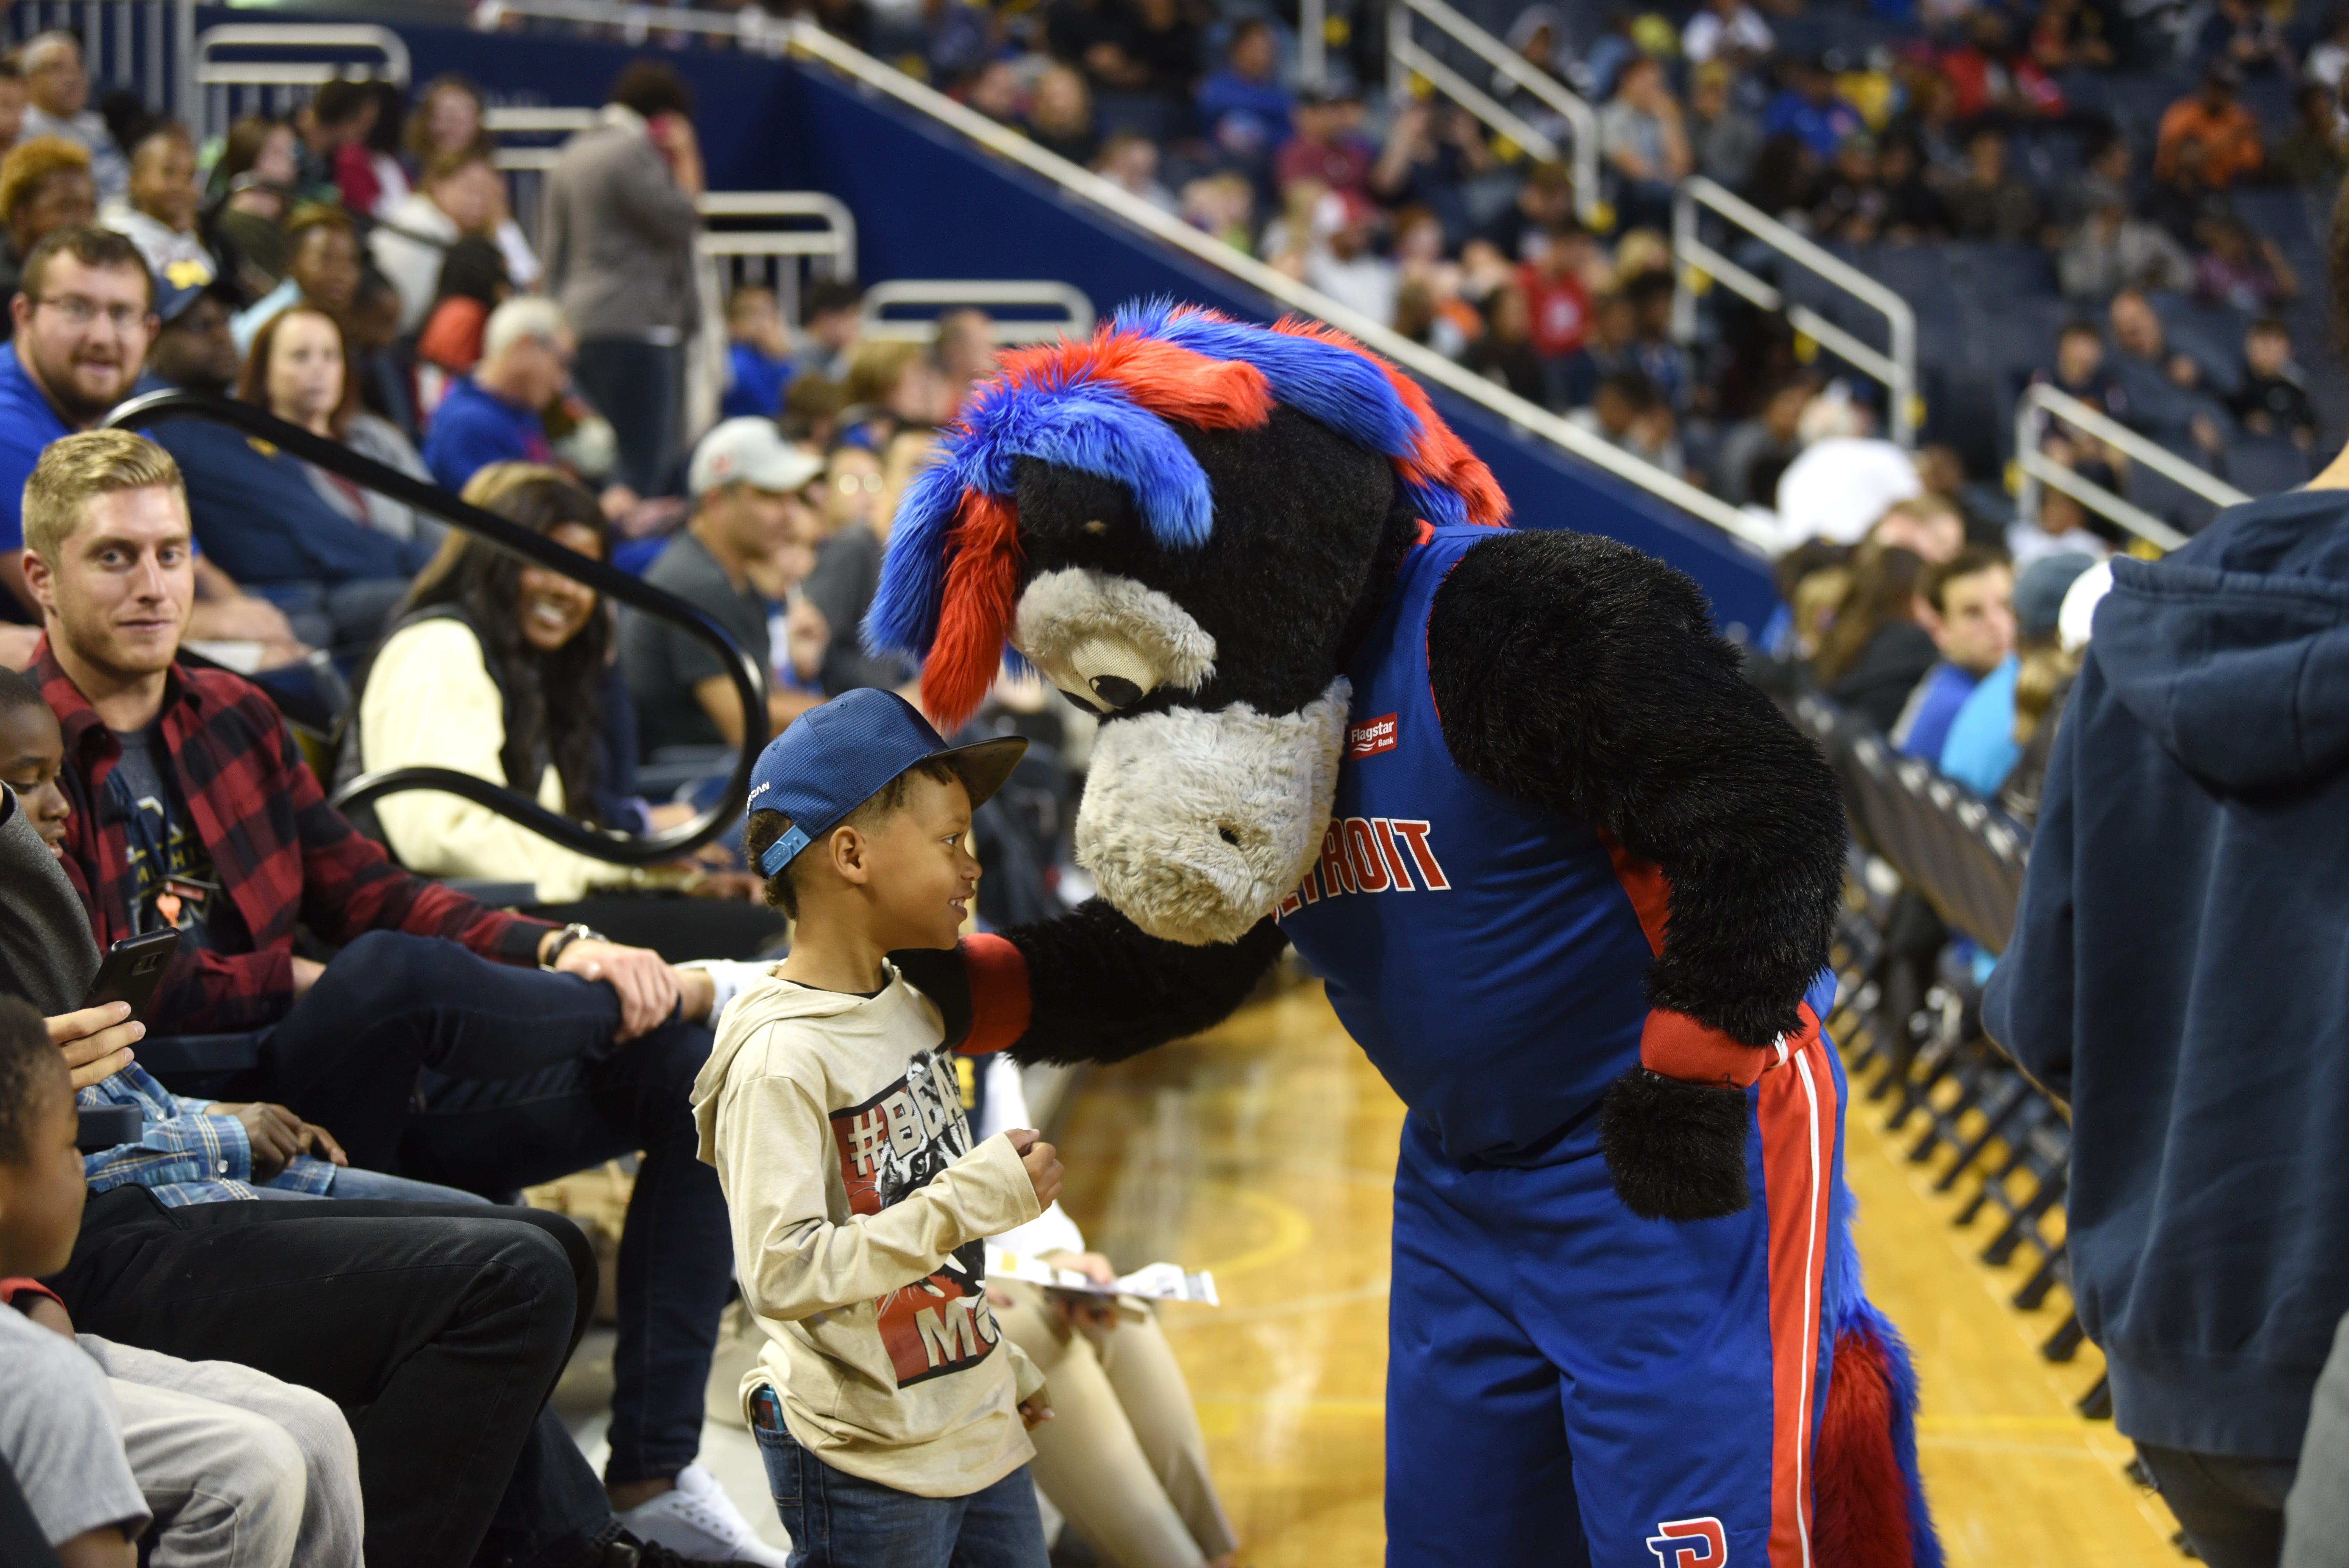 Detroit Pistons mascot Hooper has fun with a young fan.